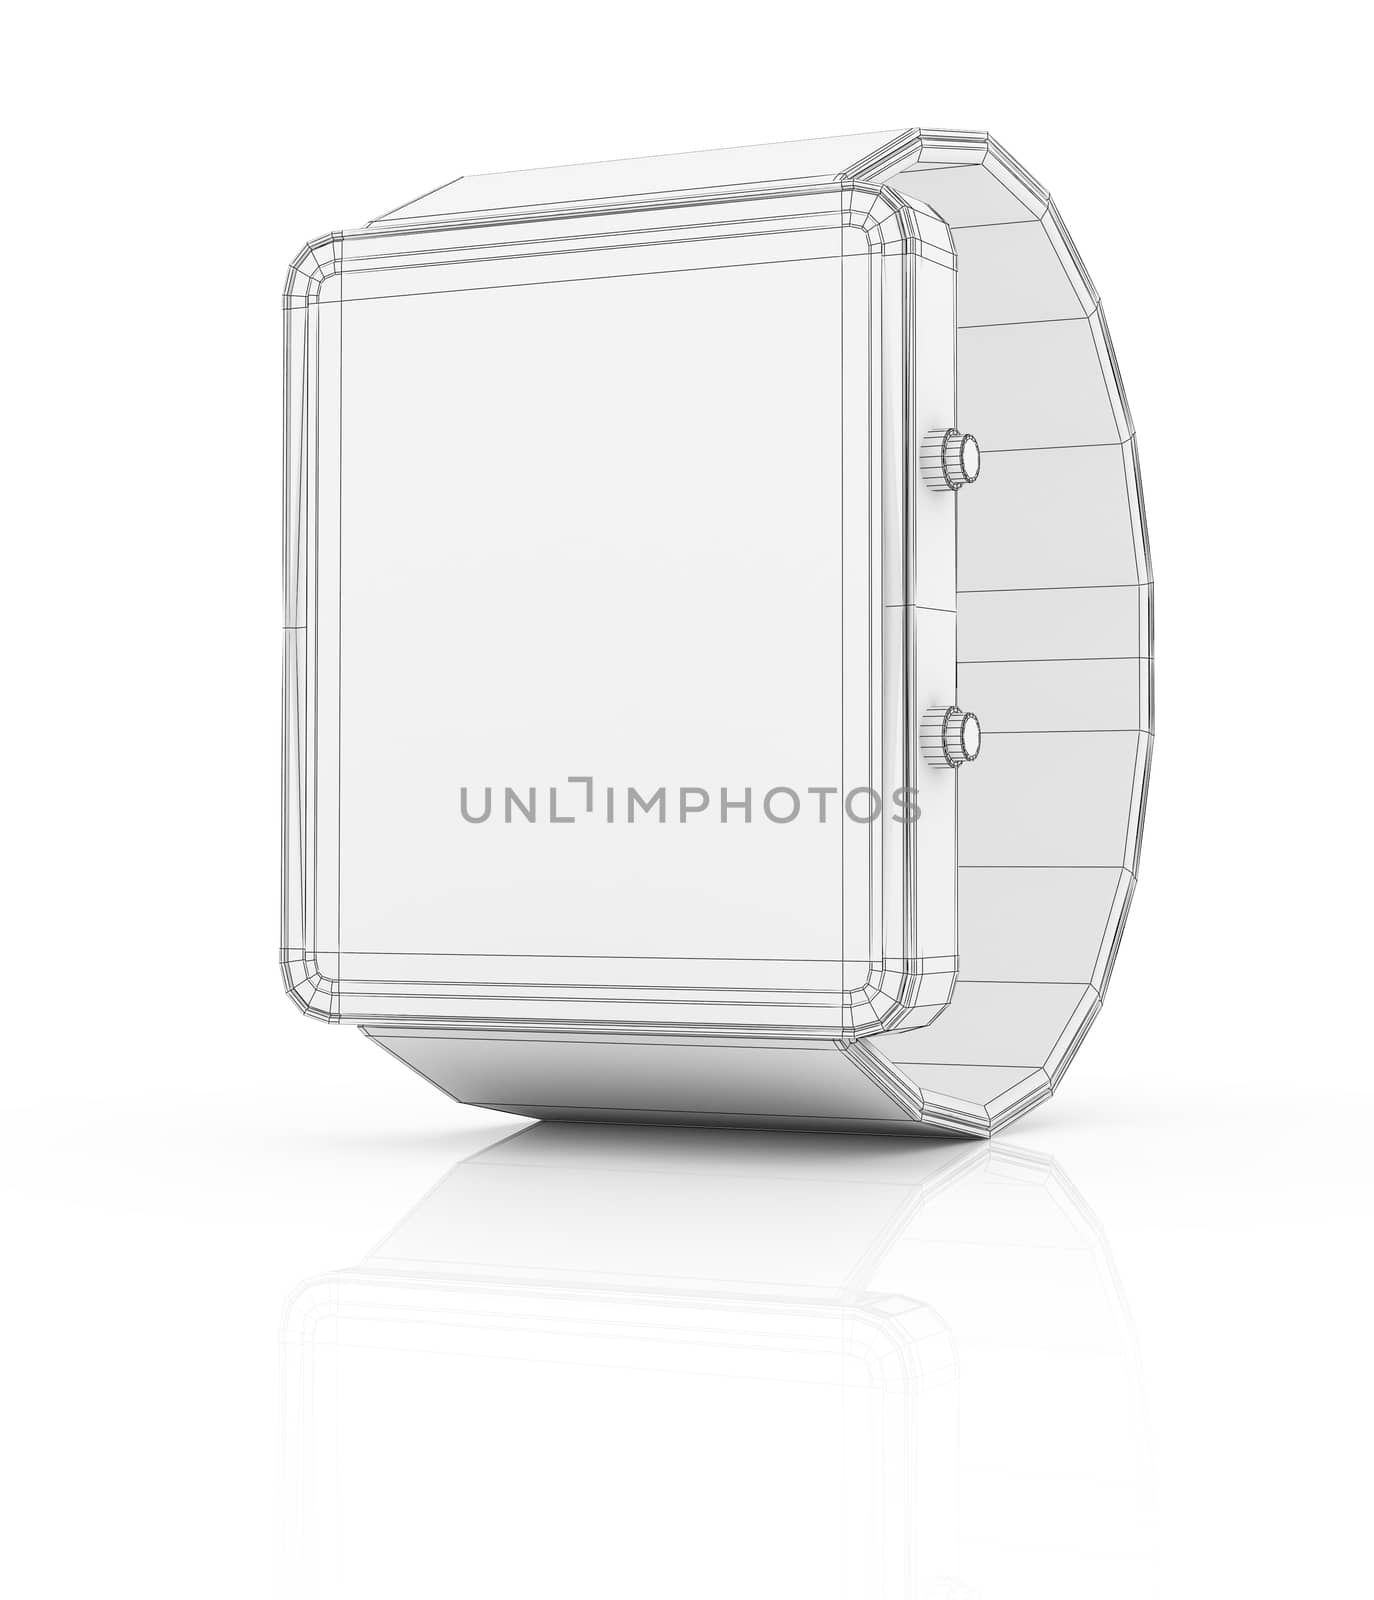 Smart watch prototype isolated on white background. 3D illustration